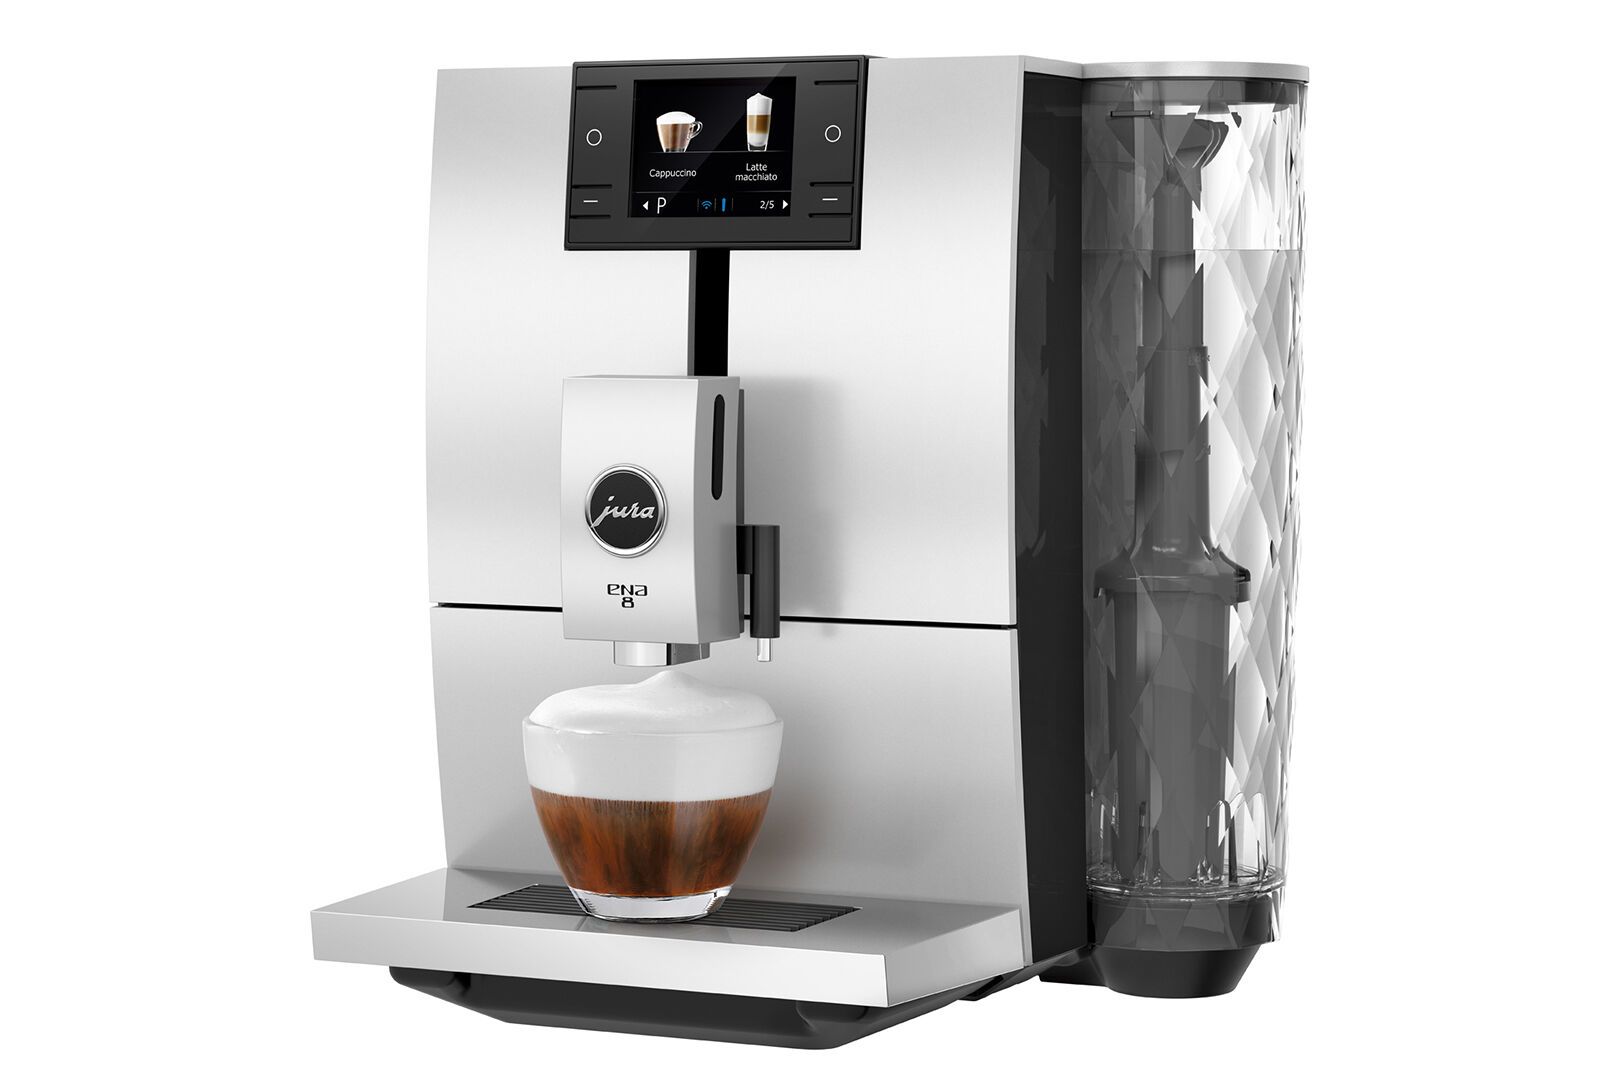 Detailed Study On The Jura Office Coffee Machine